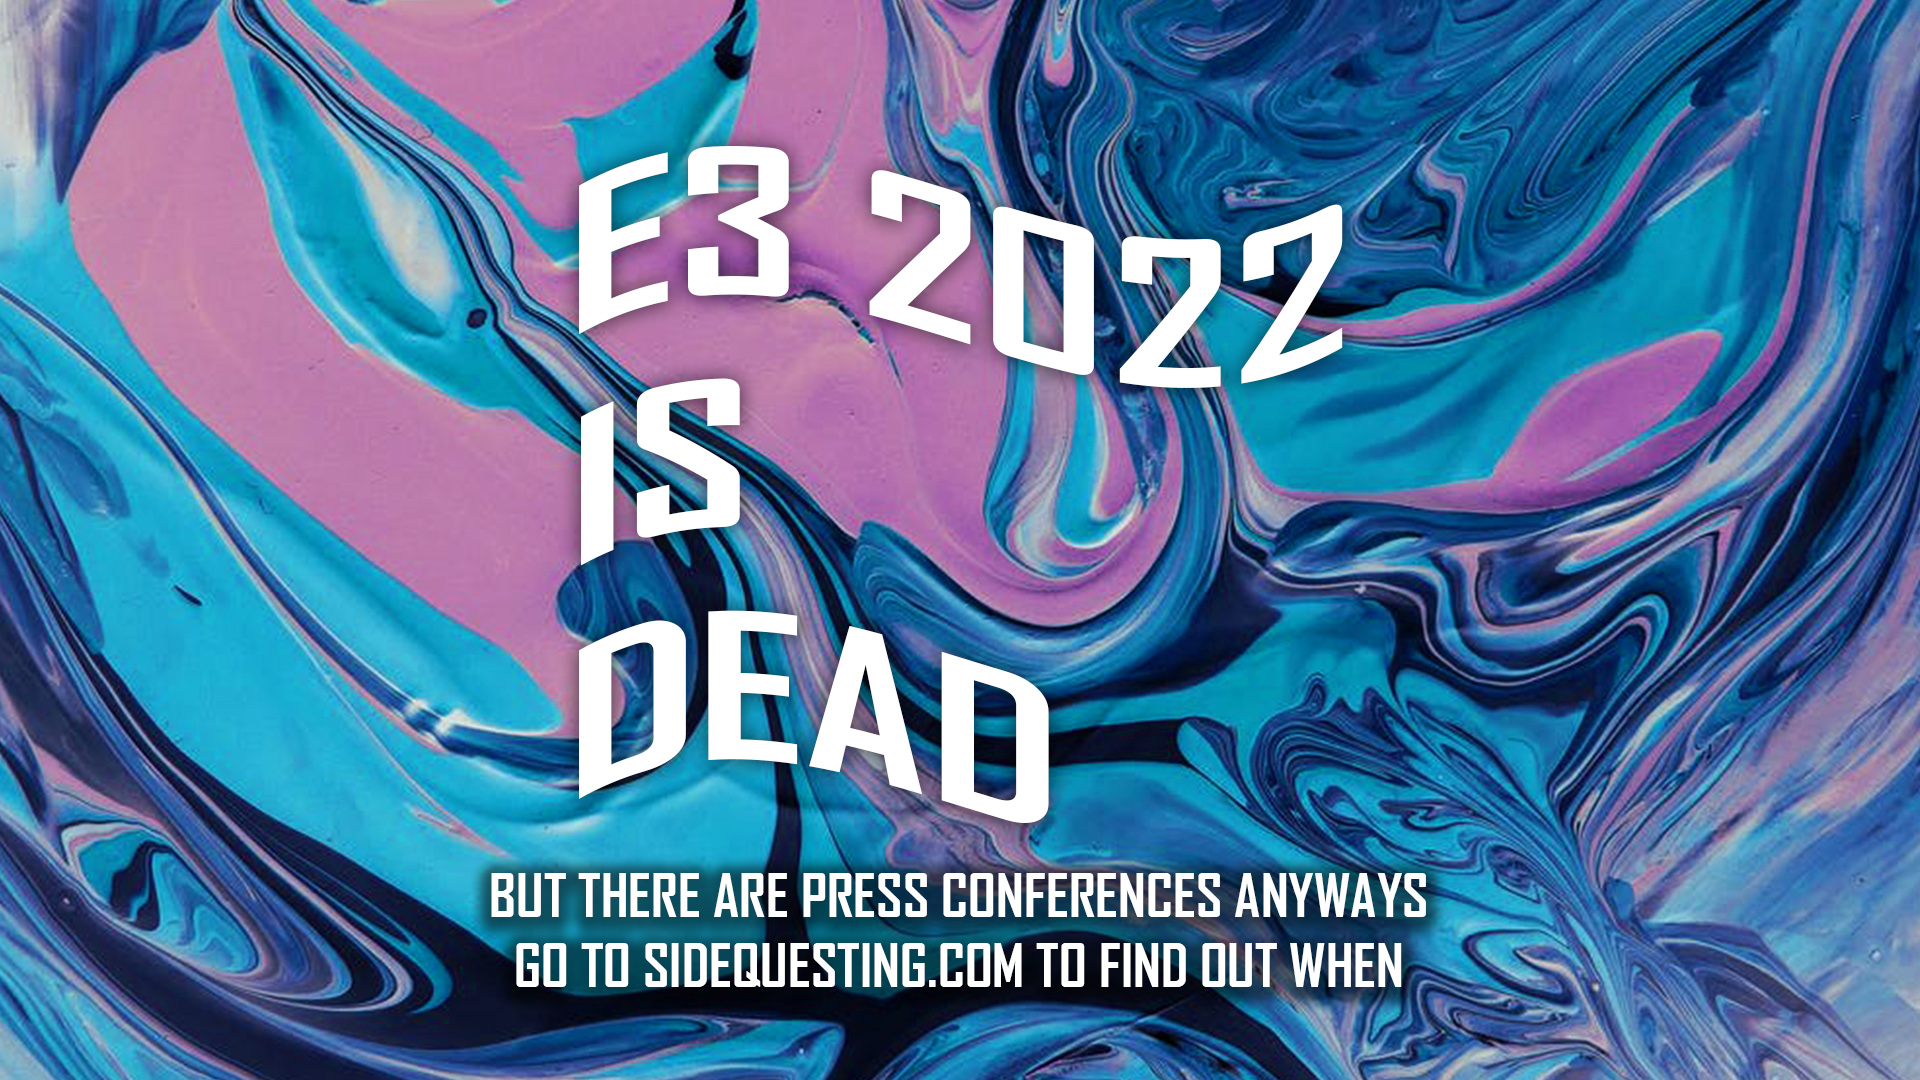 Capcom, SEGA, and more announce “It’s Totally Not E3” press conferences